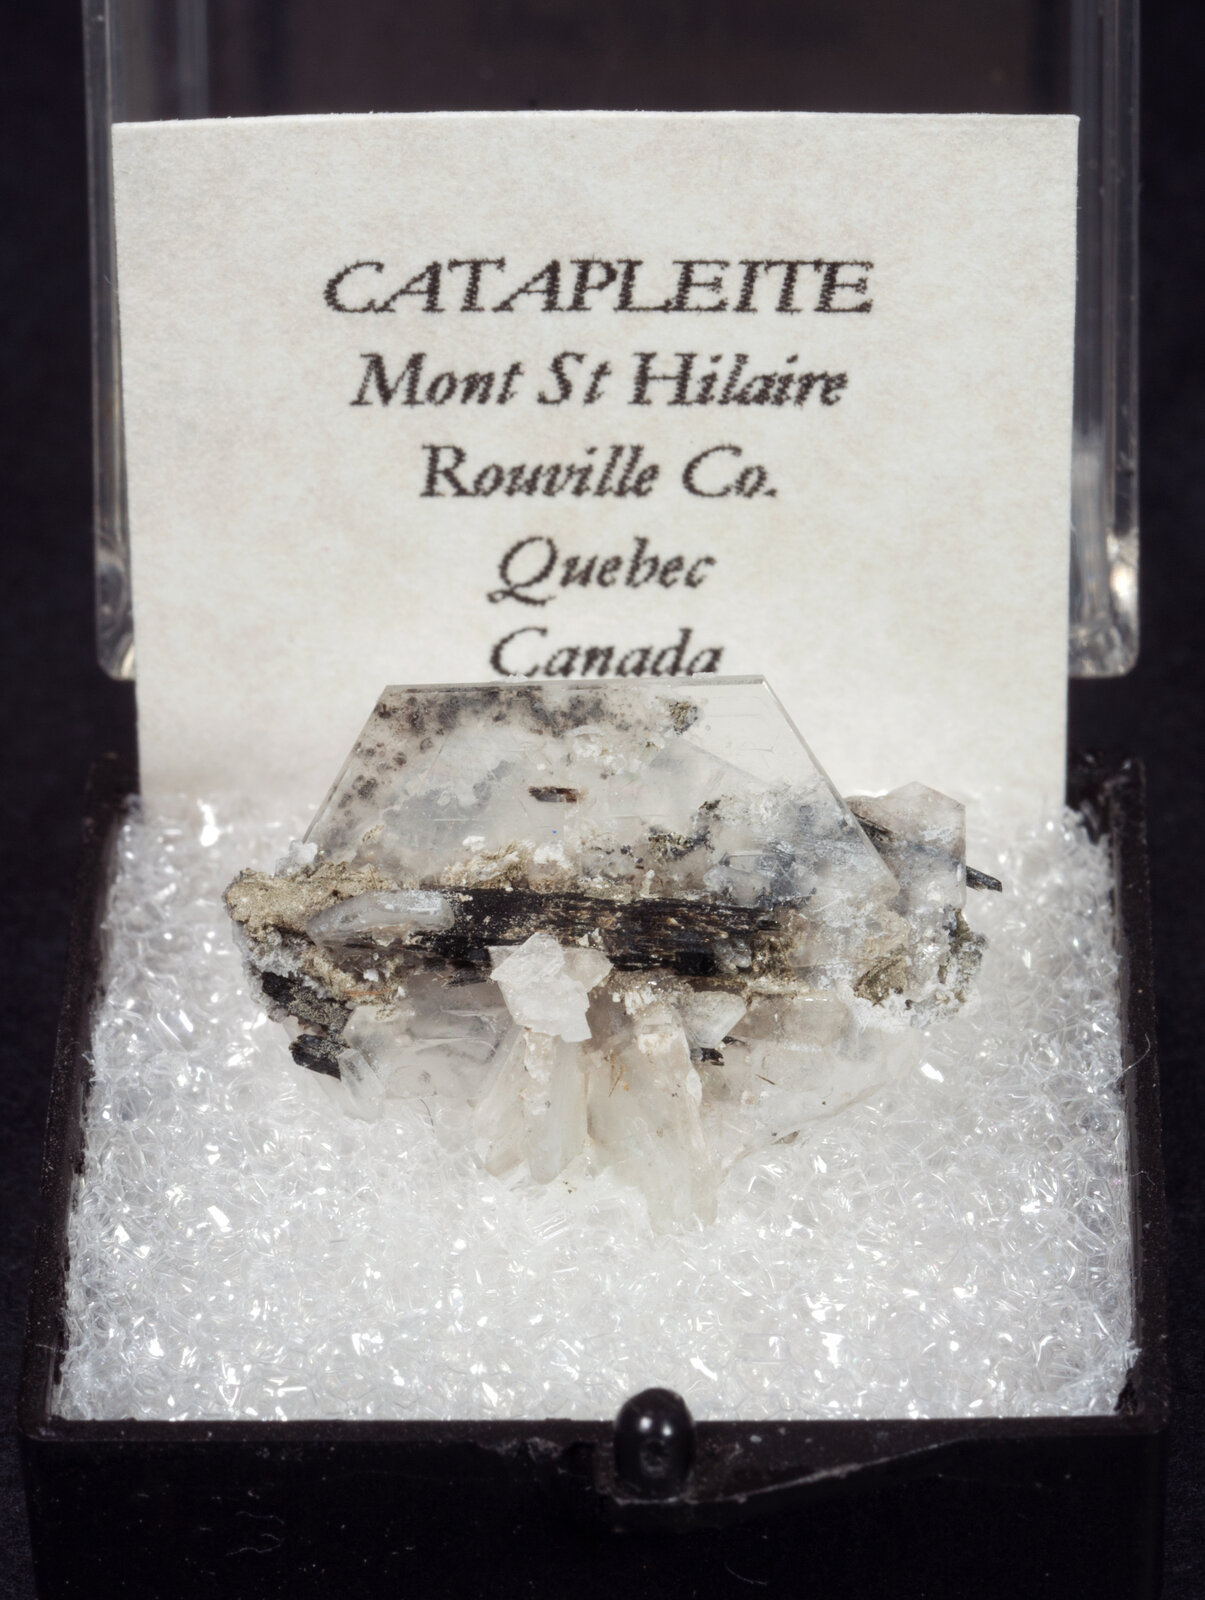 specimens/s_imagesAM6/Catapleiite-MG47AM6f.jpg